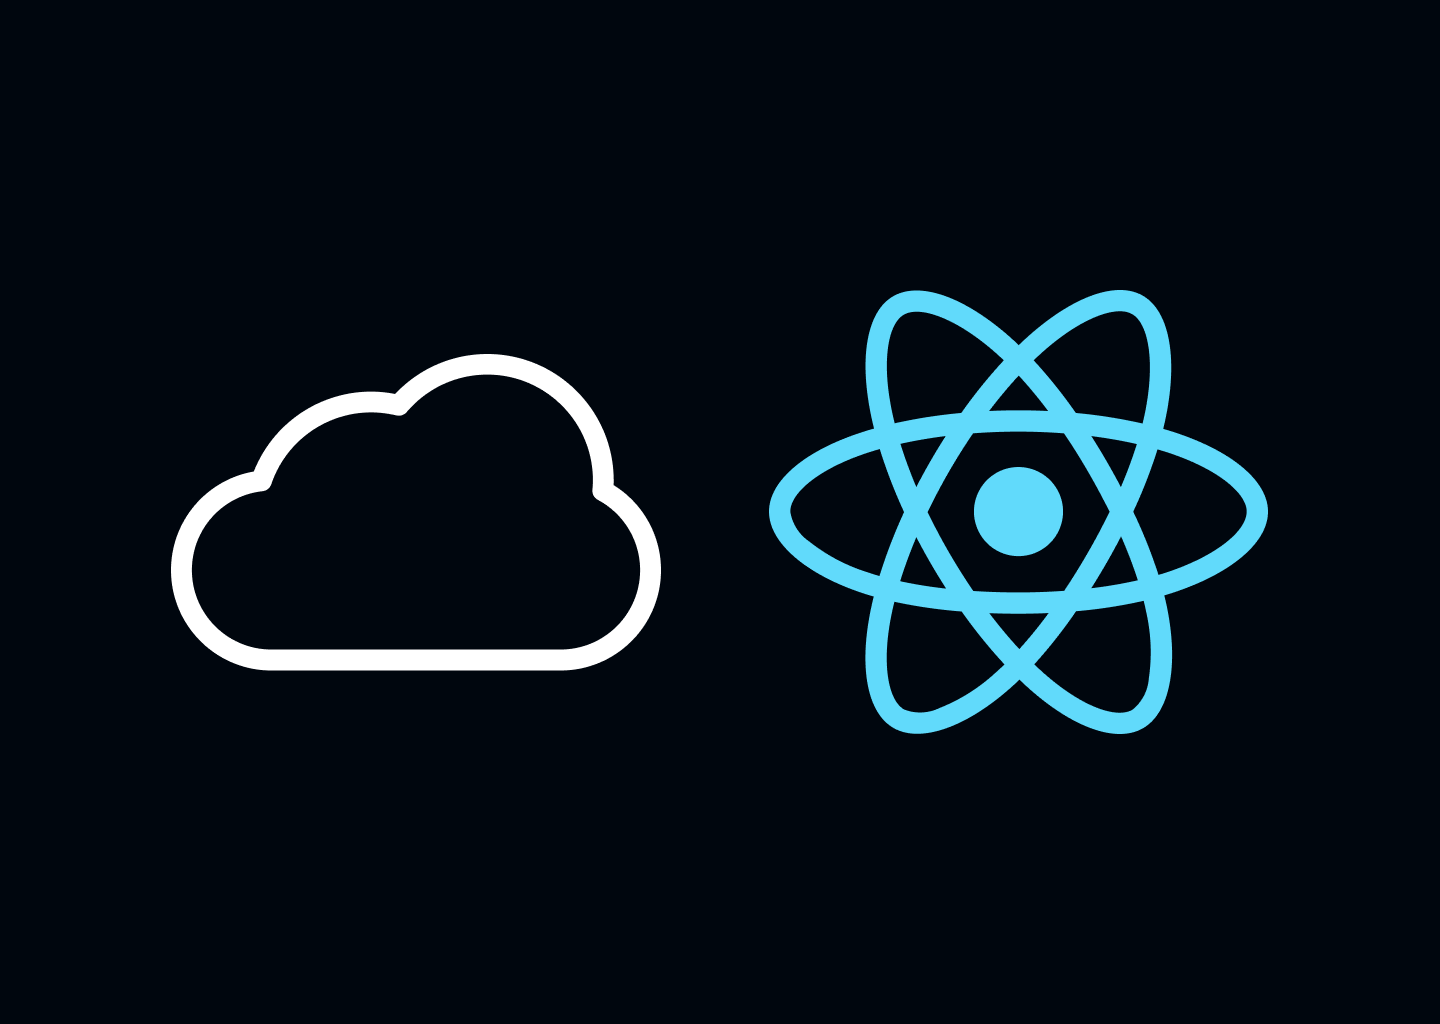 Image of React logo next to cloud icon